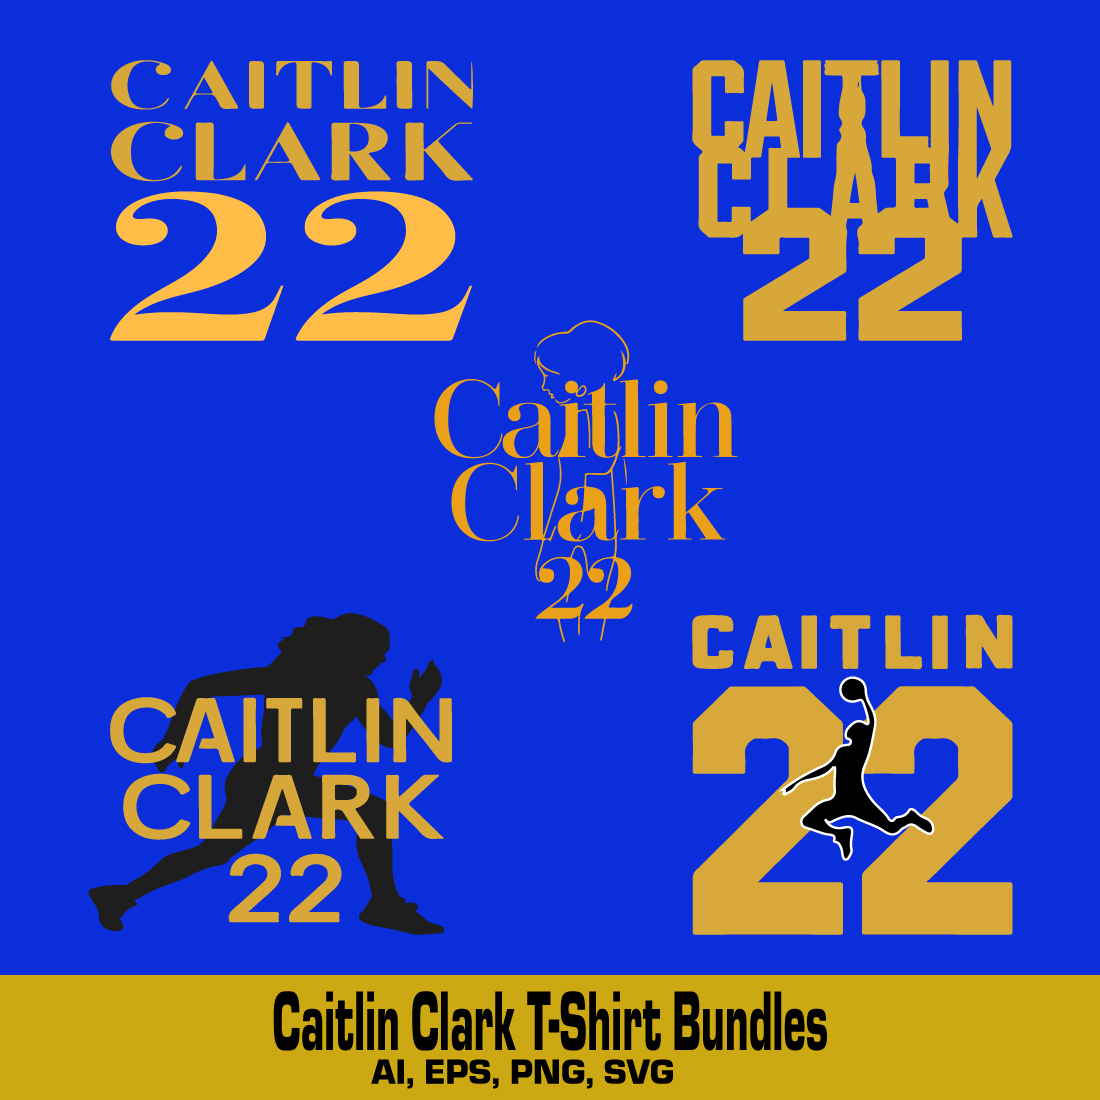 caitlin clark t shirt design bundles media image 839